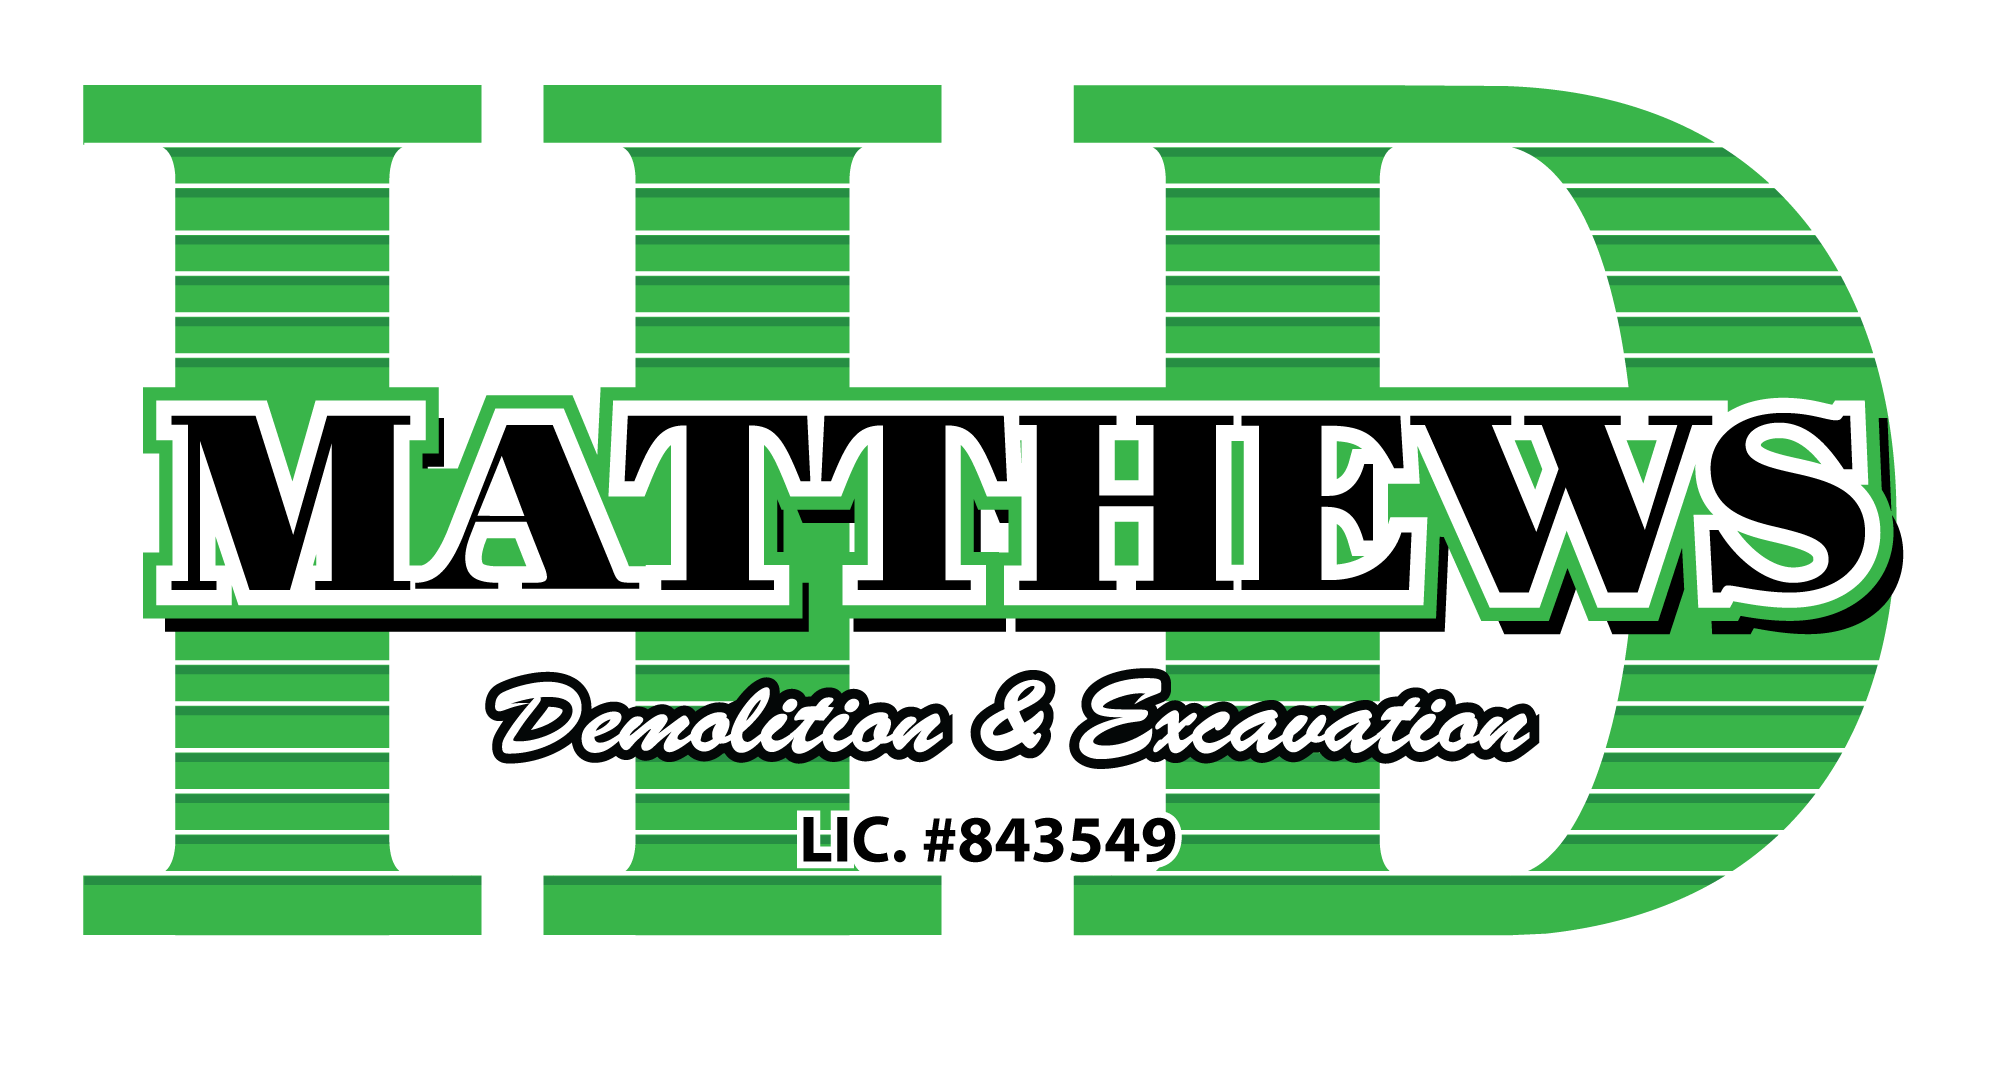 HD Matthews Demolition